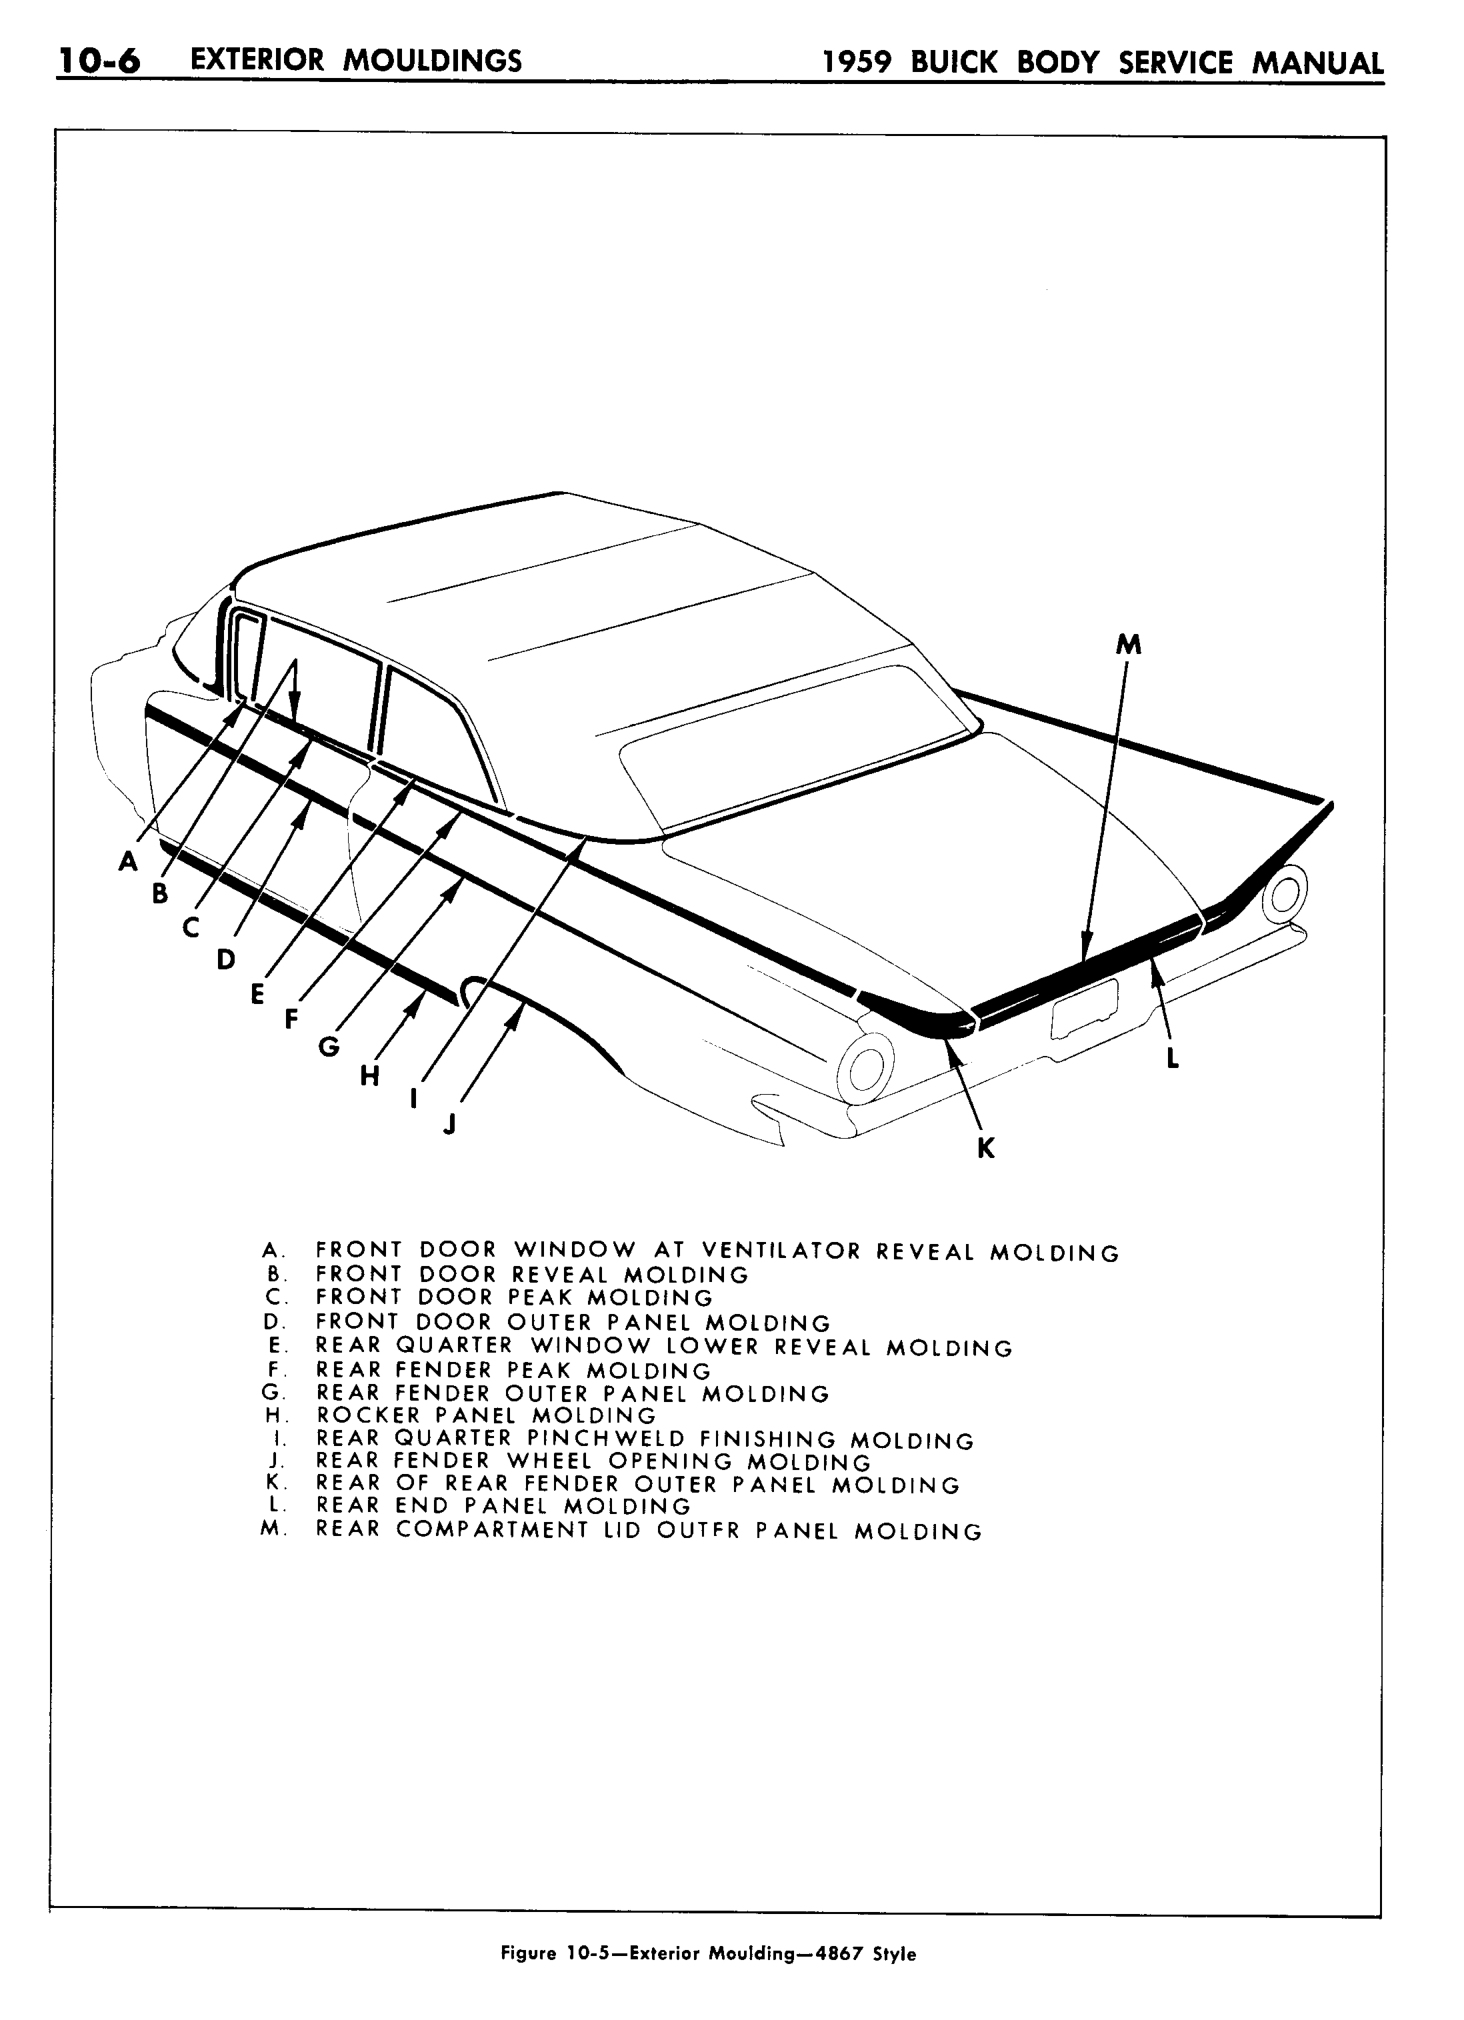 n_11 1959 Buick Body Service-Exterior Moldings_6.jpg